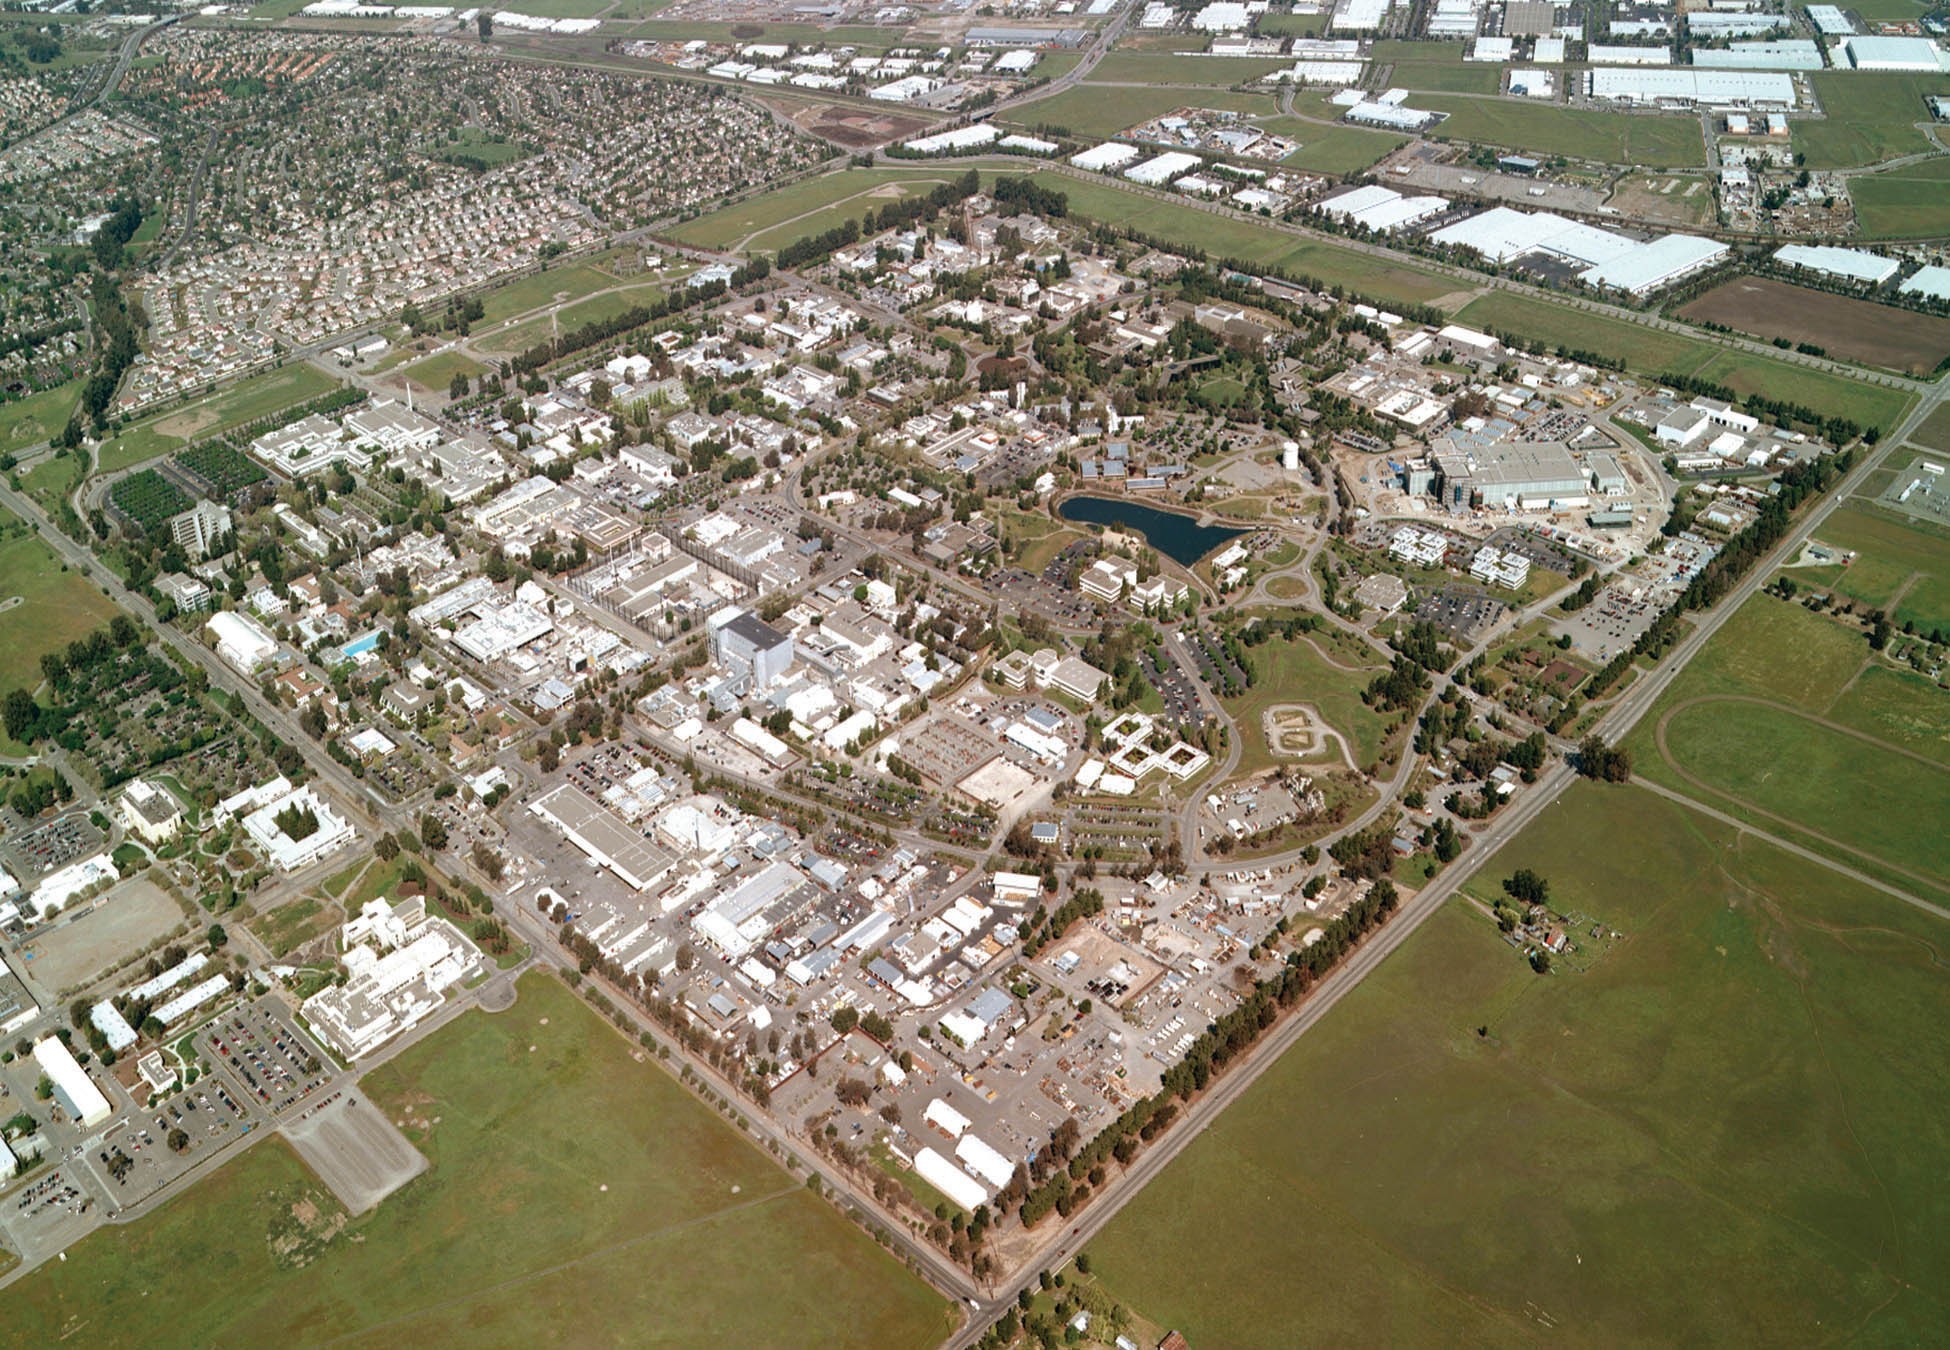 General 1950x1350 aerial view landscape city